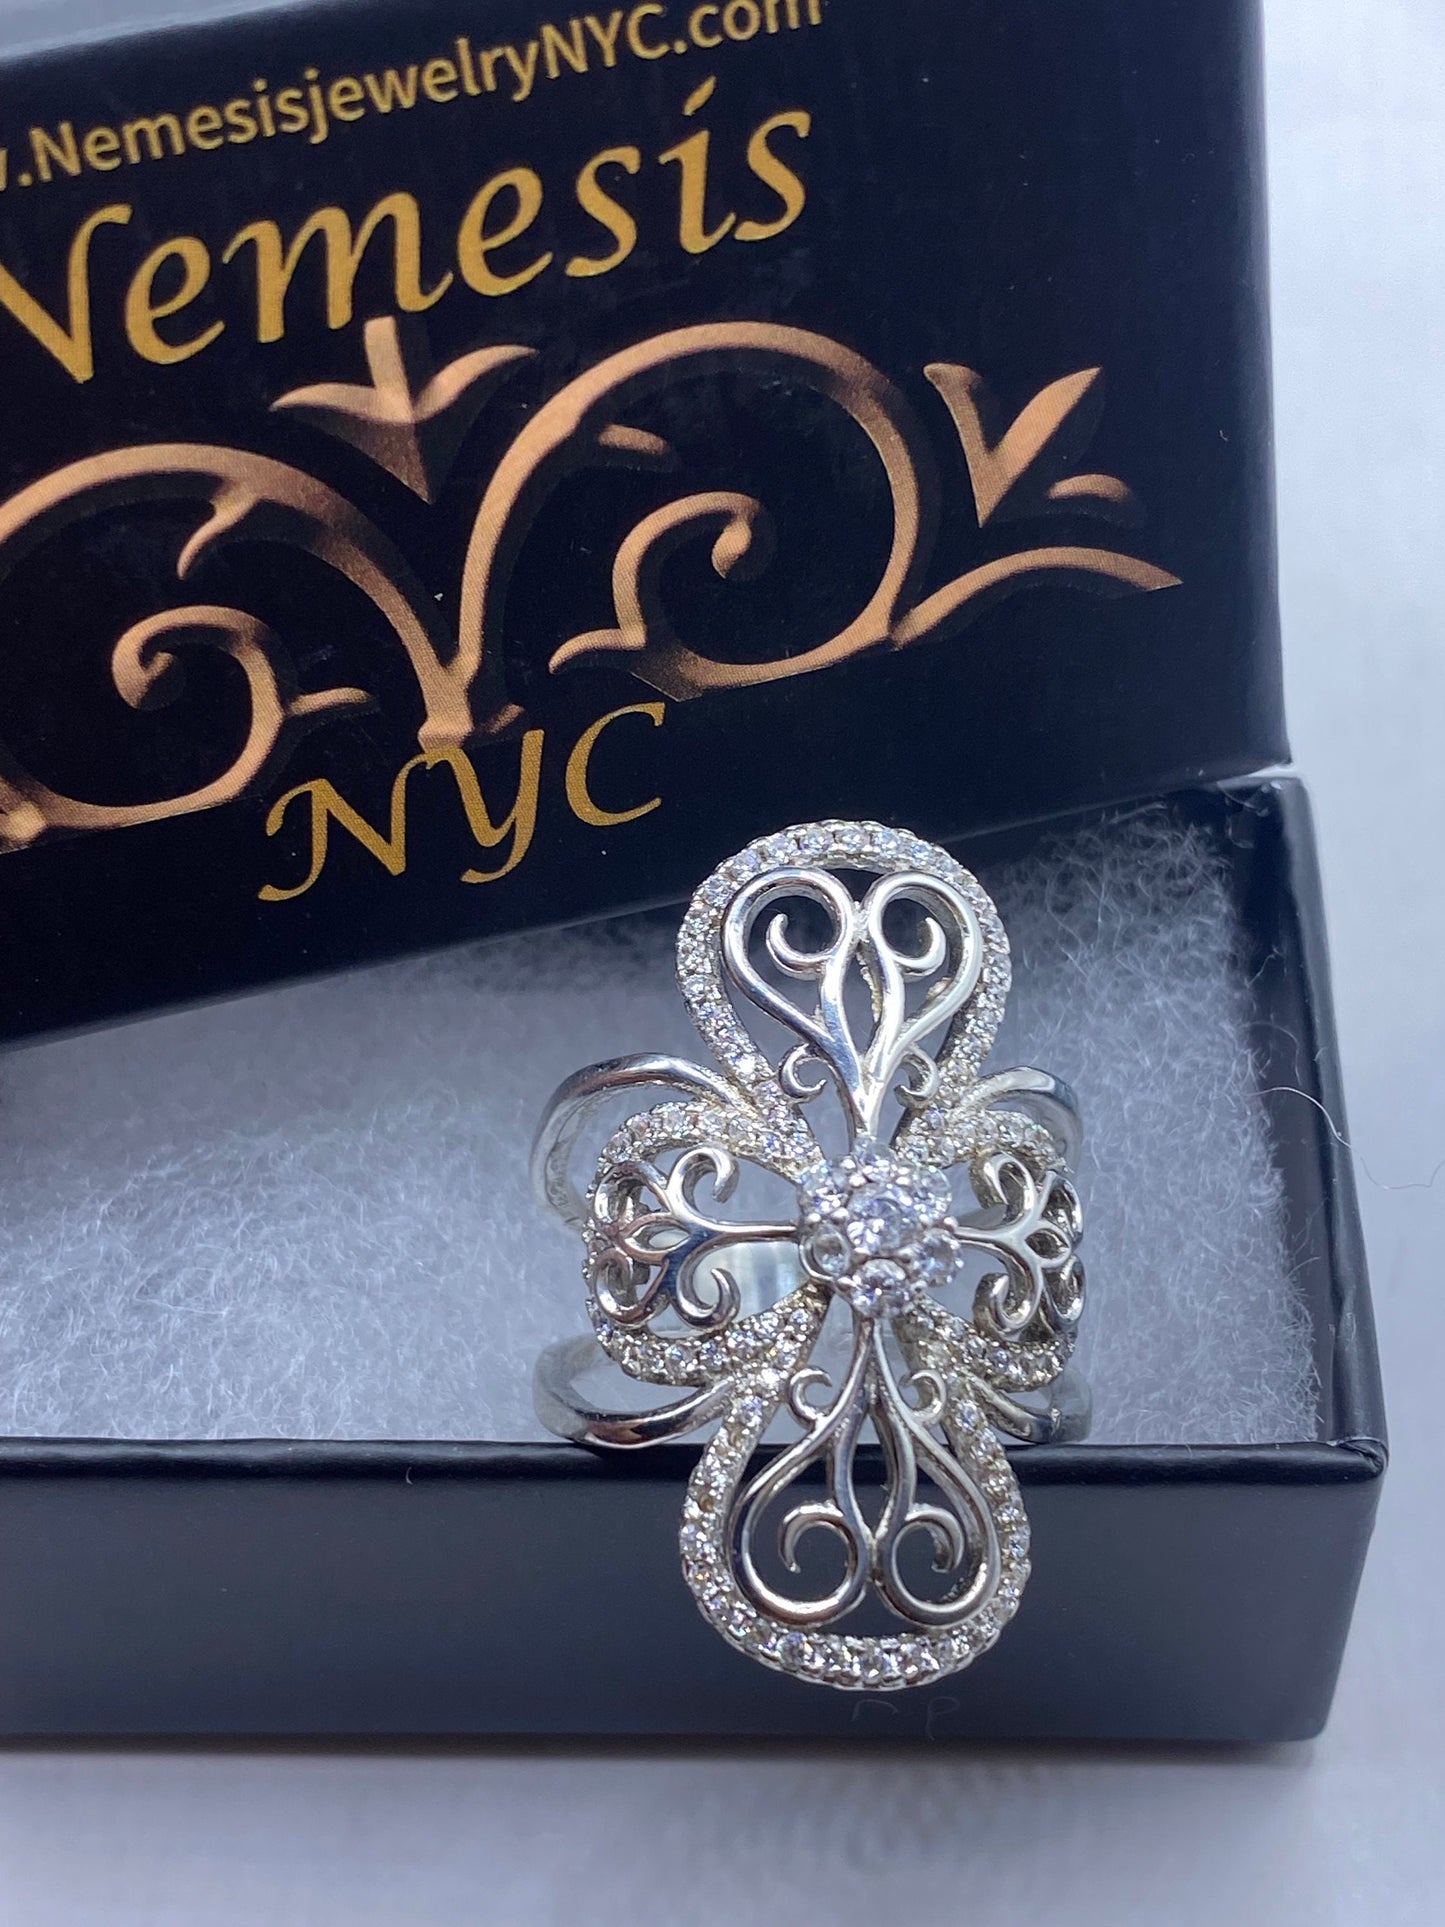 Vintage filigree white Sapphire Crystal Celtic Flower Sterling Silver ring